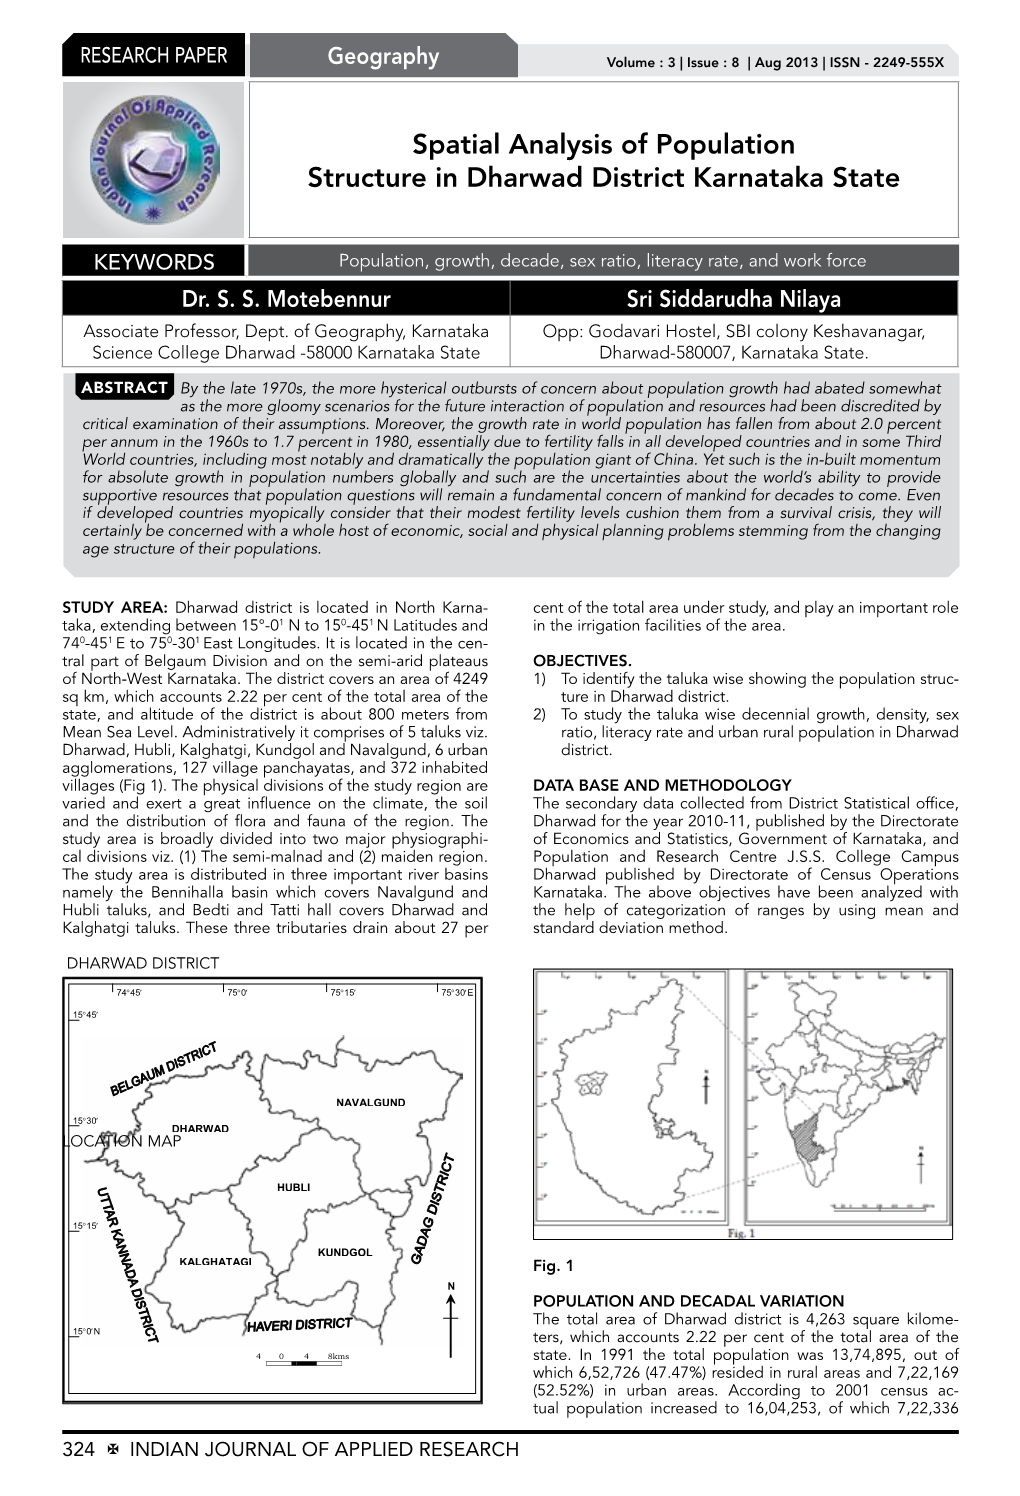 Spatial Analysis of Population Structure in Dharwad District Karnataka State